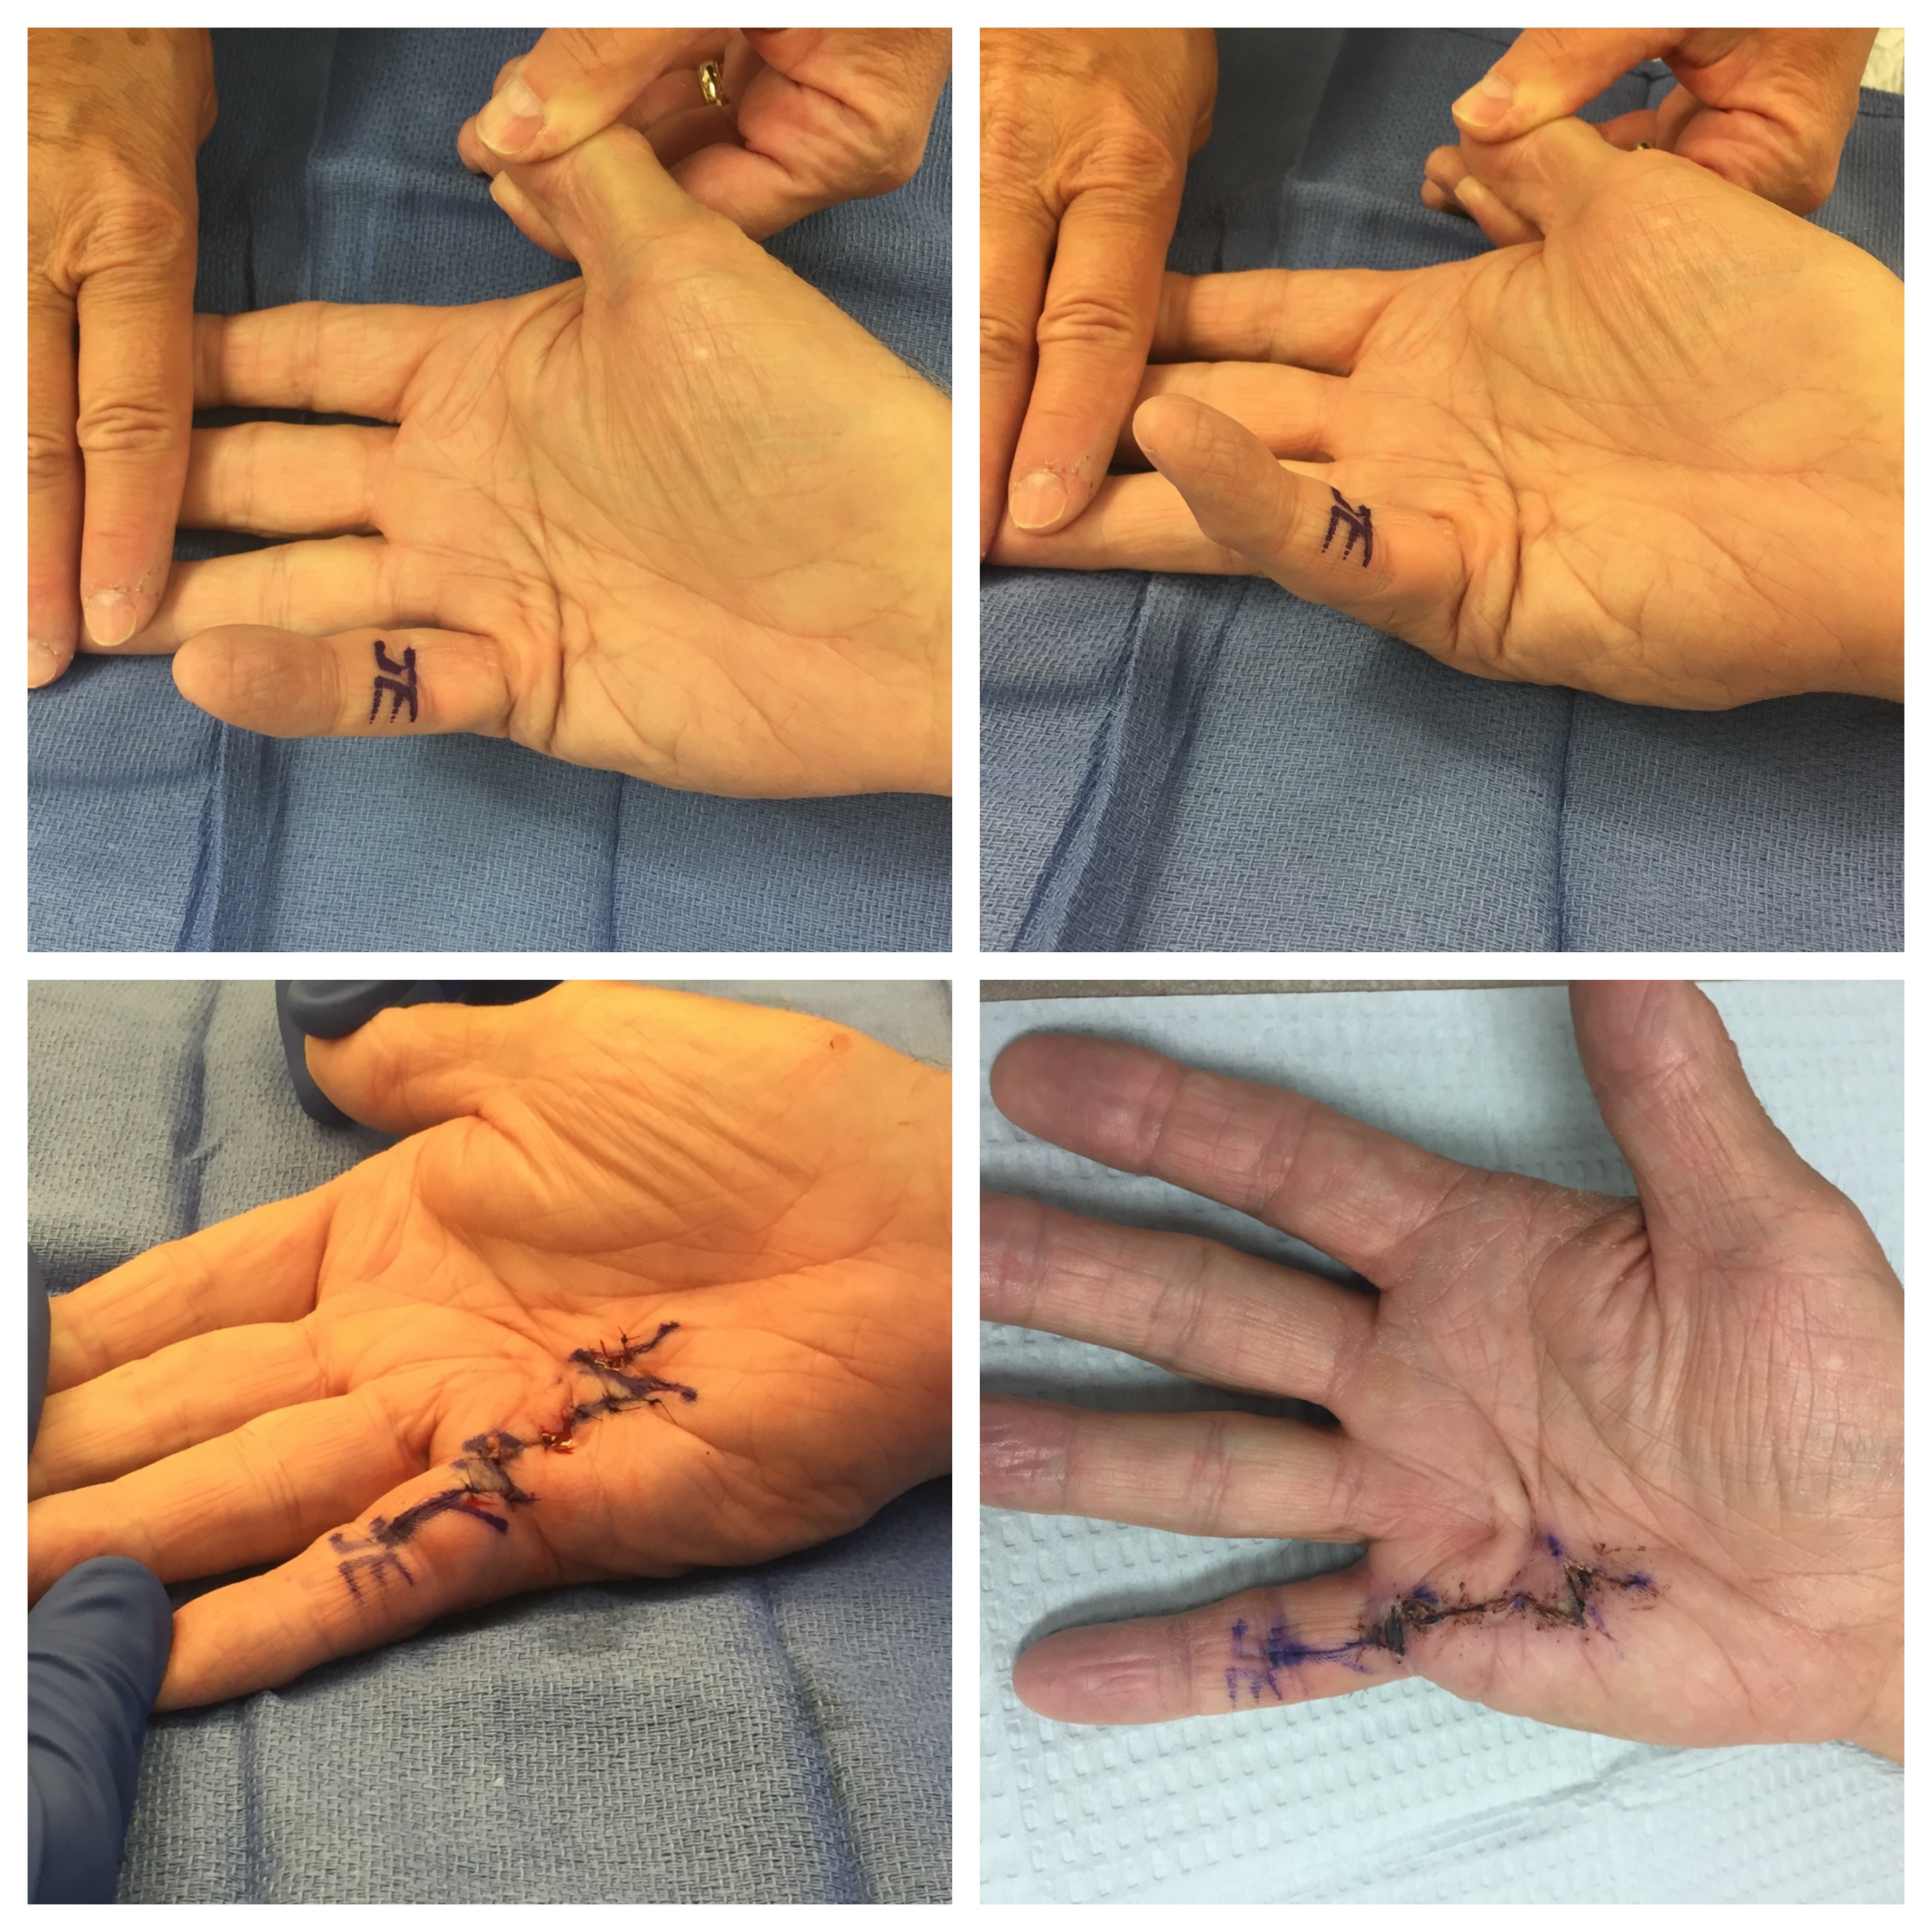 Ingrown nail surgery - wikidoc